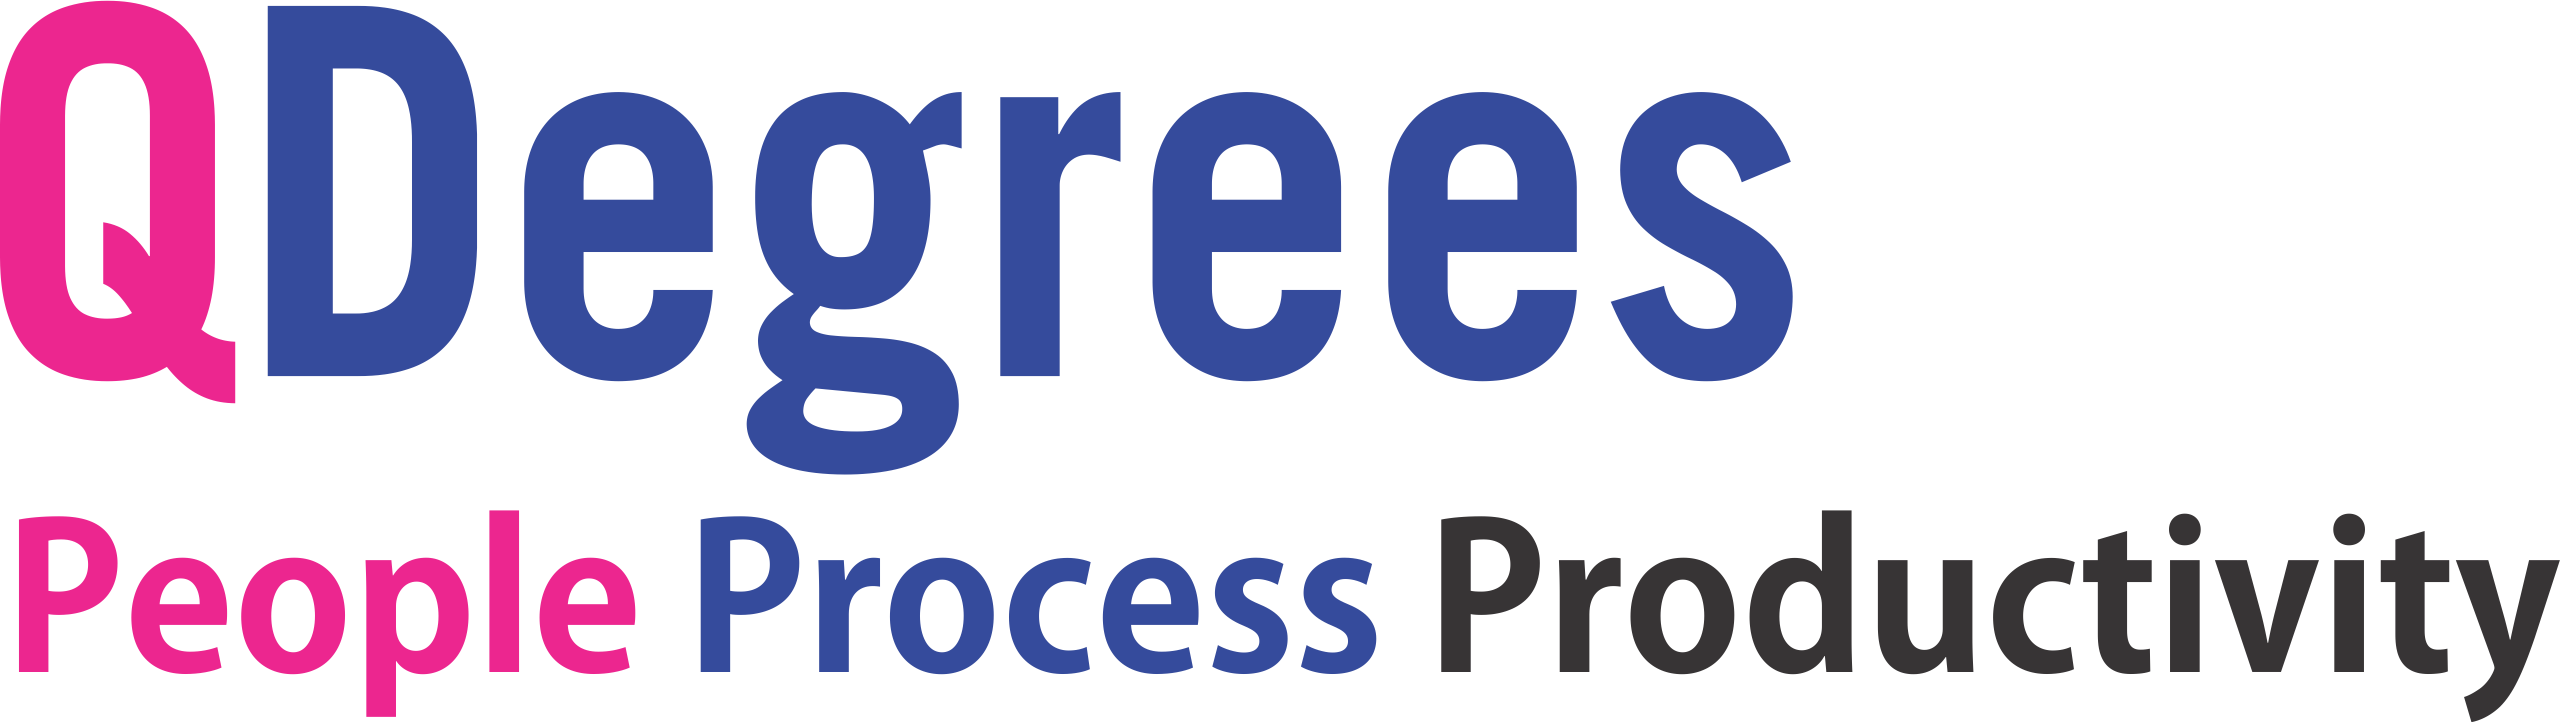 QDegrees Project Management Services Logo